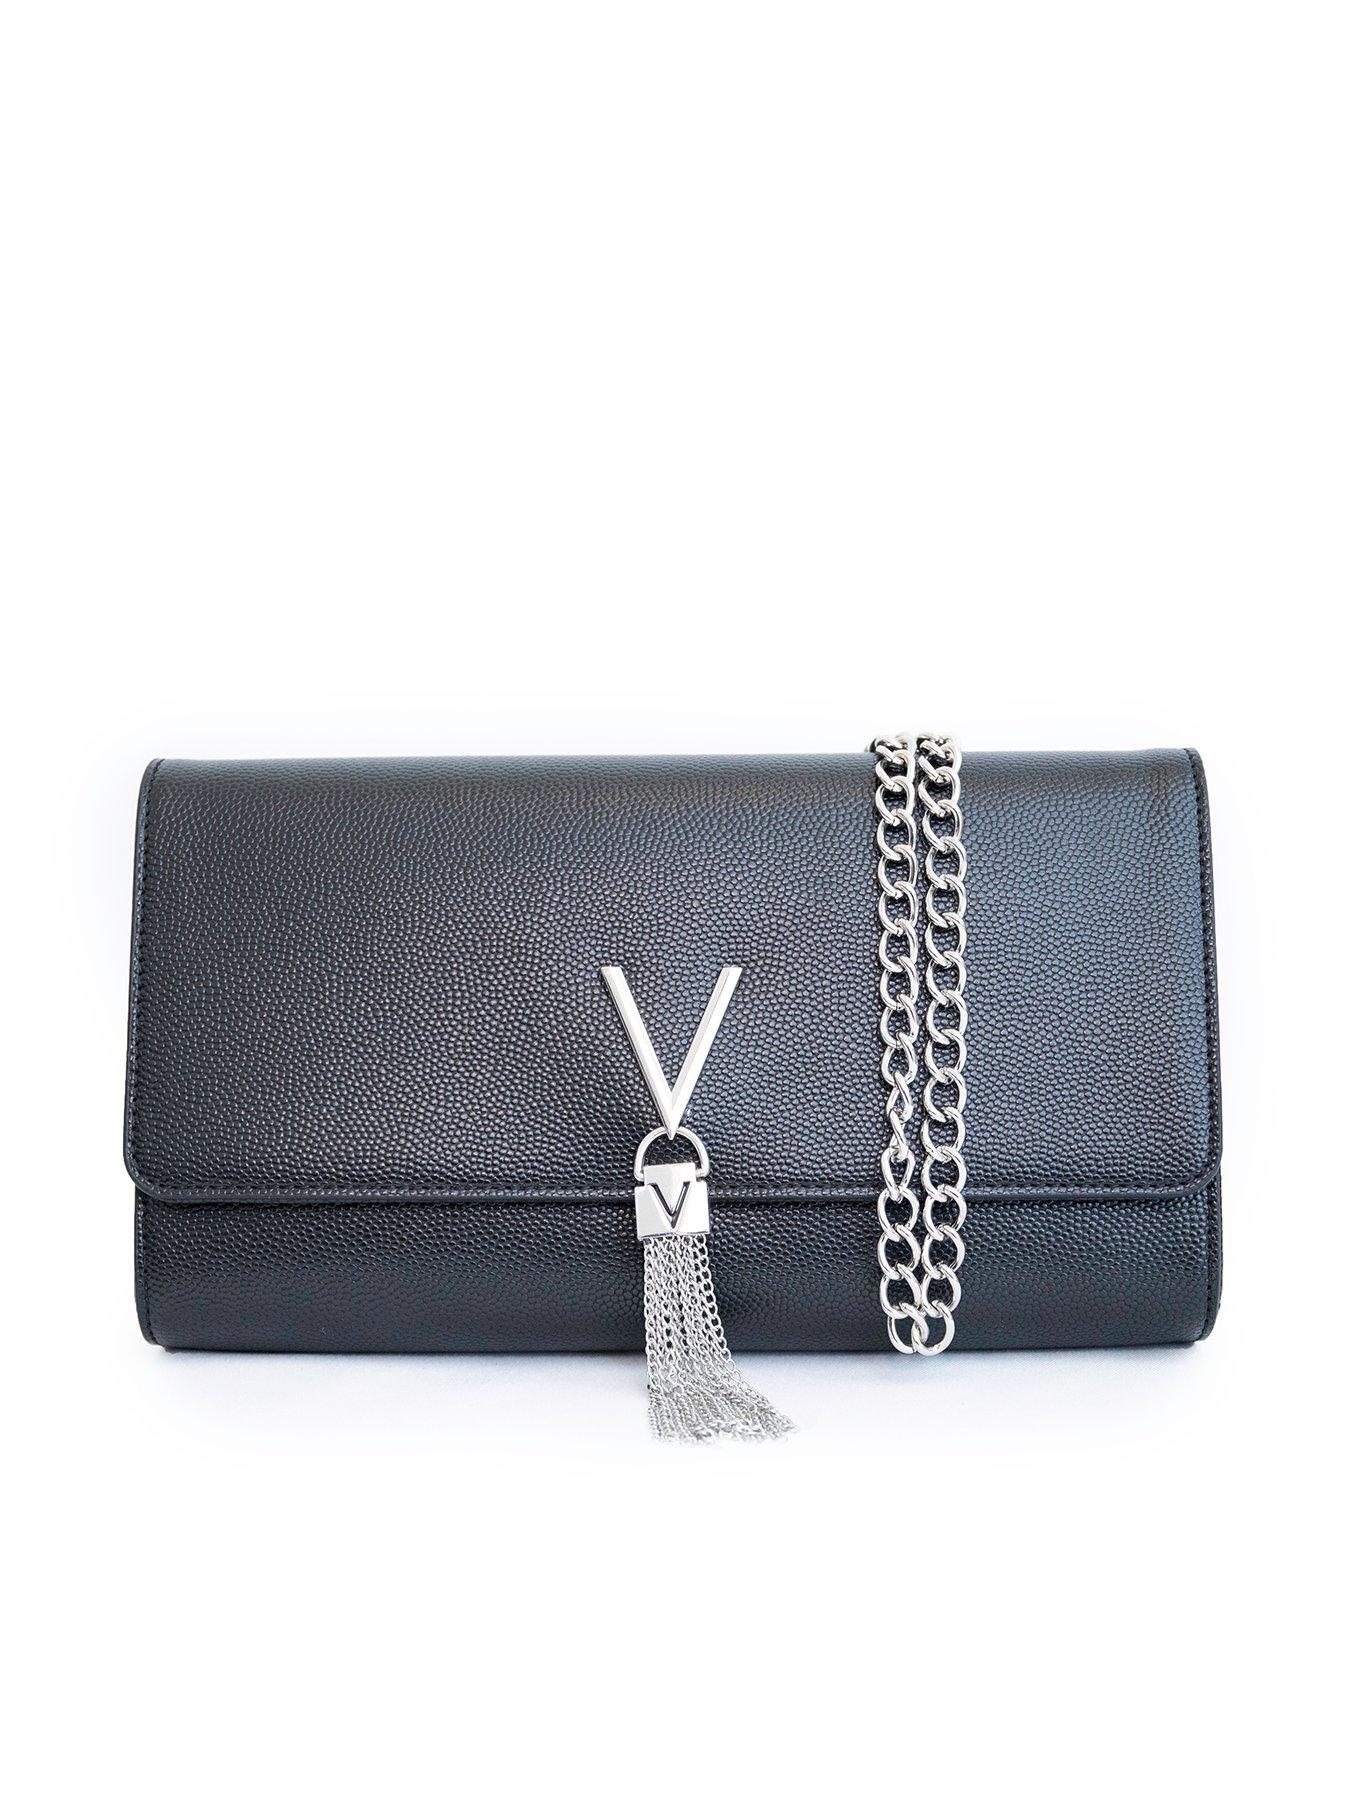 Ladies shoulder bag Valentino Bags Divina 410 Black - Shop and Buy